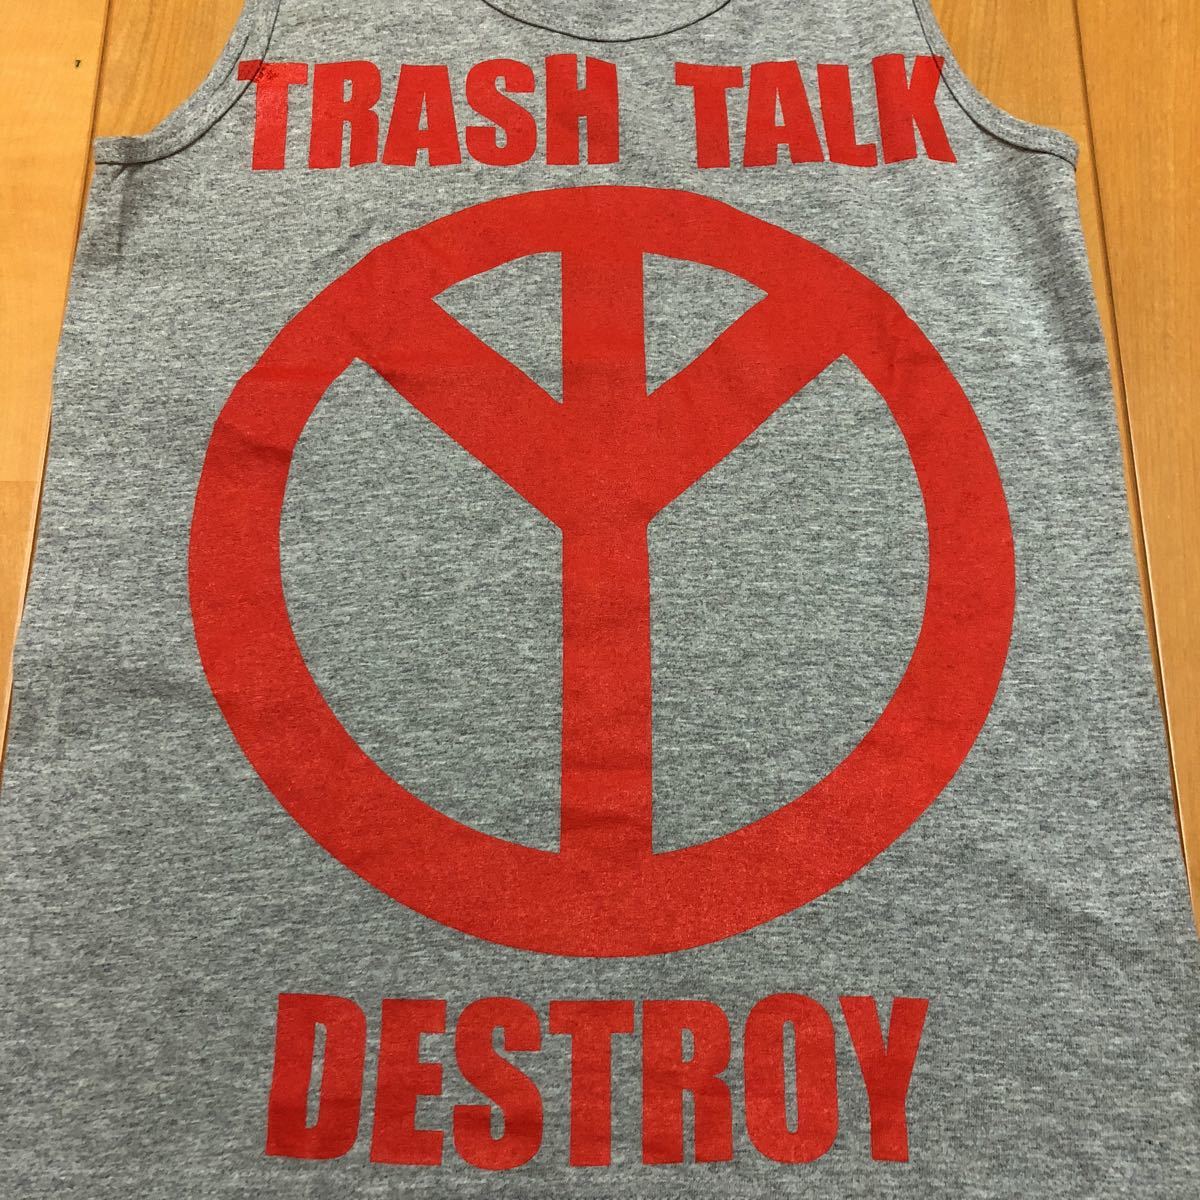 Trash Talk タンクトップ ハードコア NYHC Hardcore Cro mags Bad Brains Minor Threat Black Flag FUGAZI Agnostic Front sxe youth crew_画像2